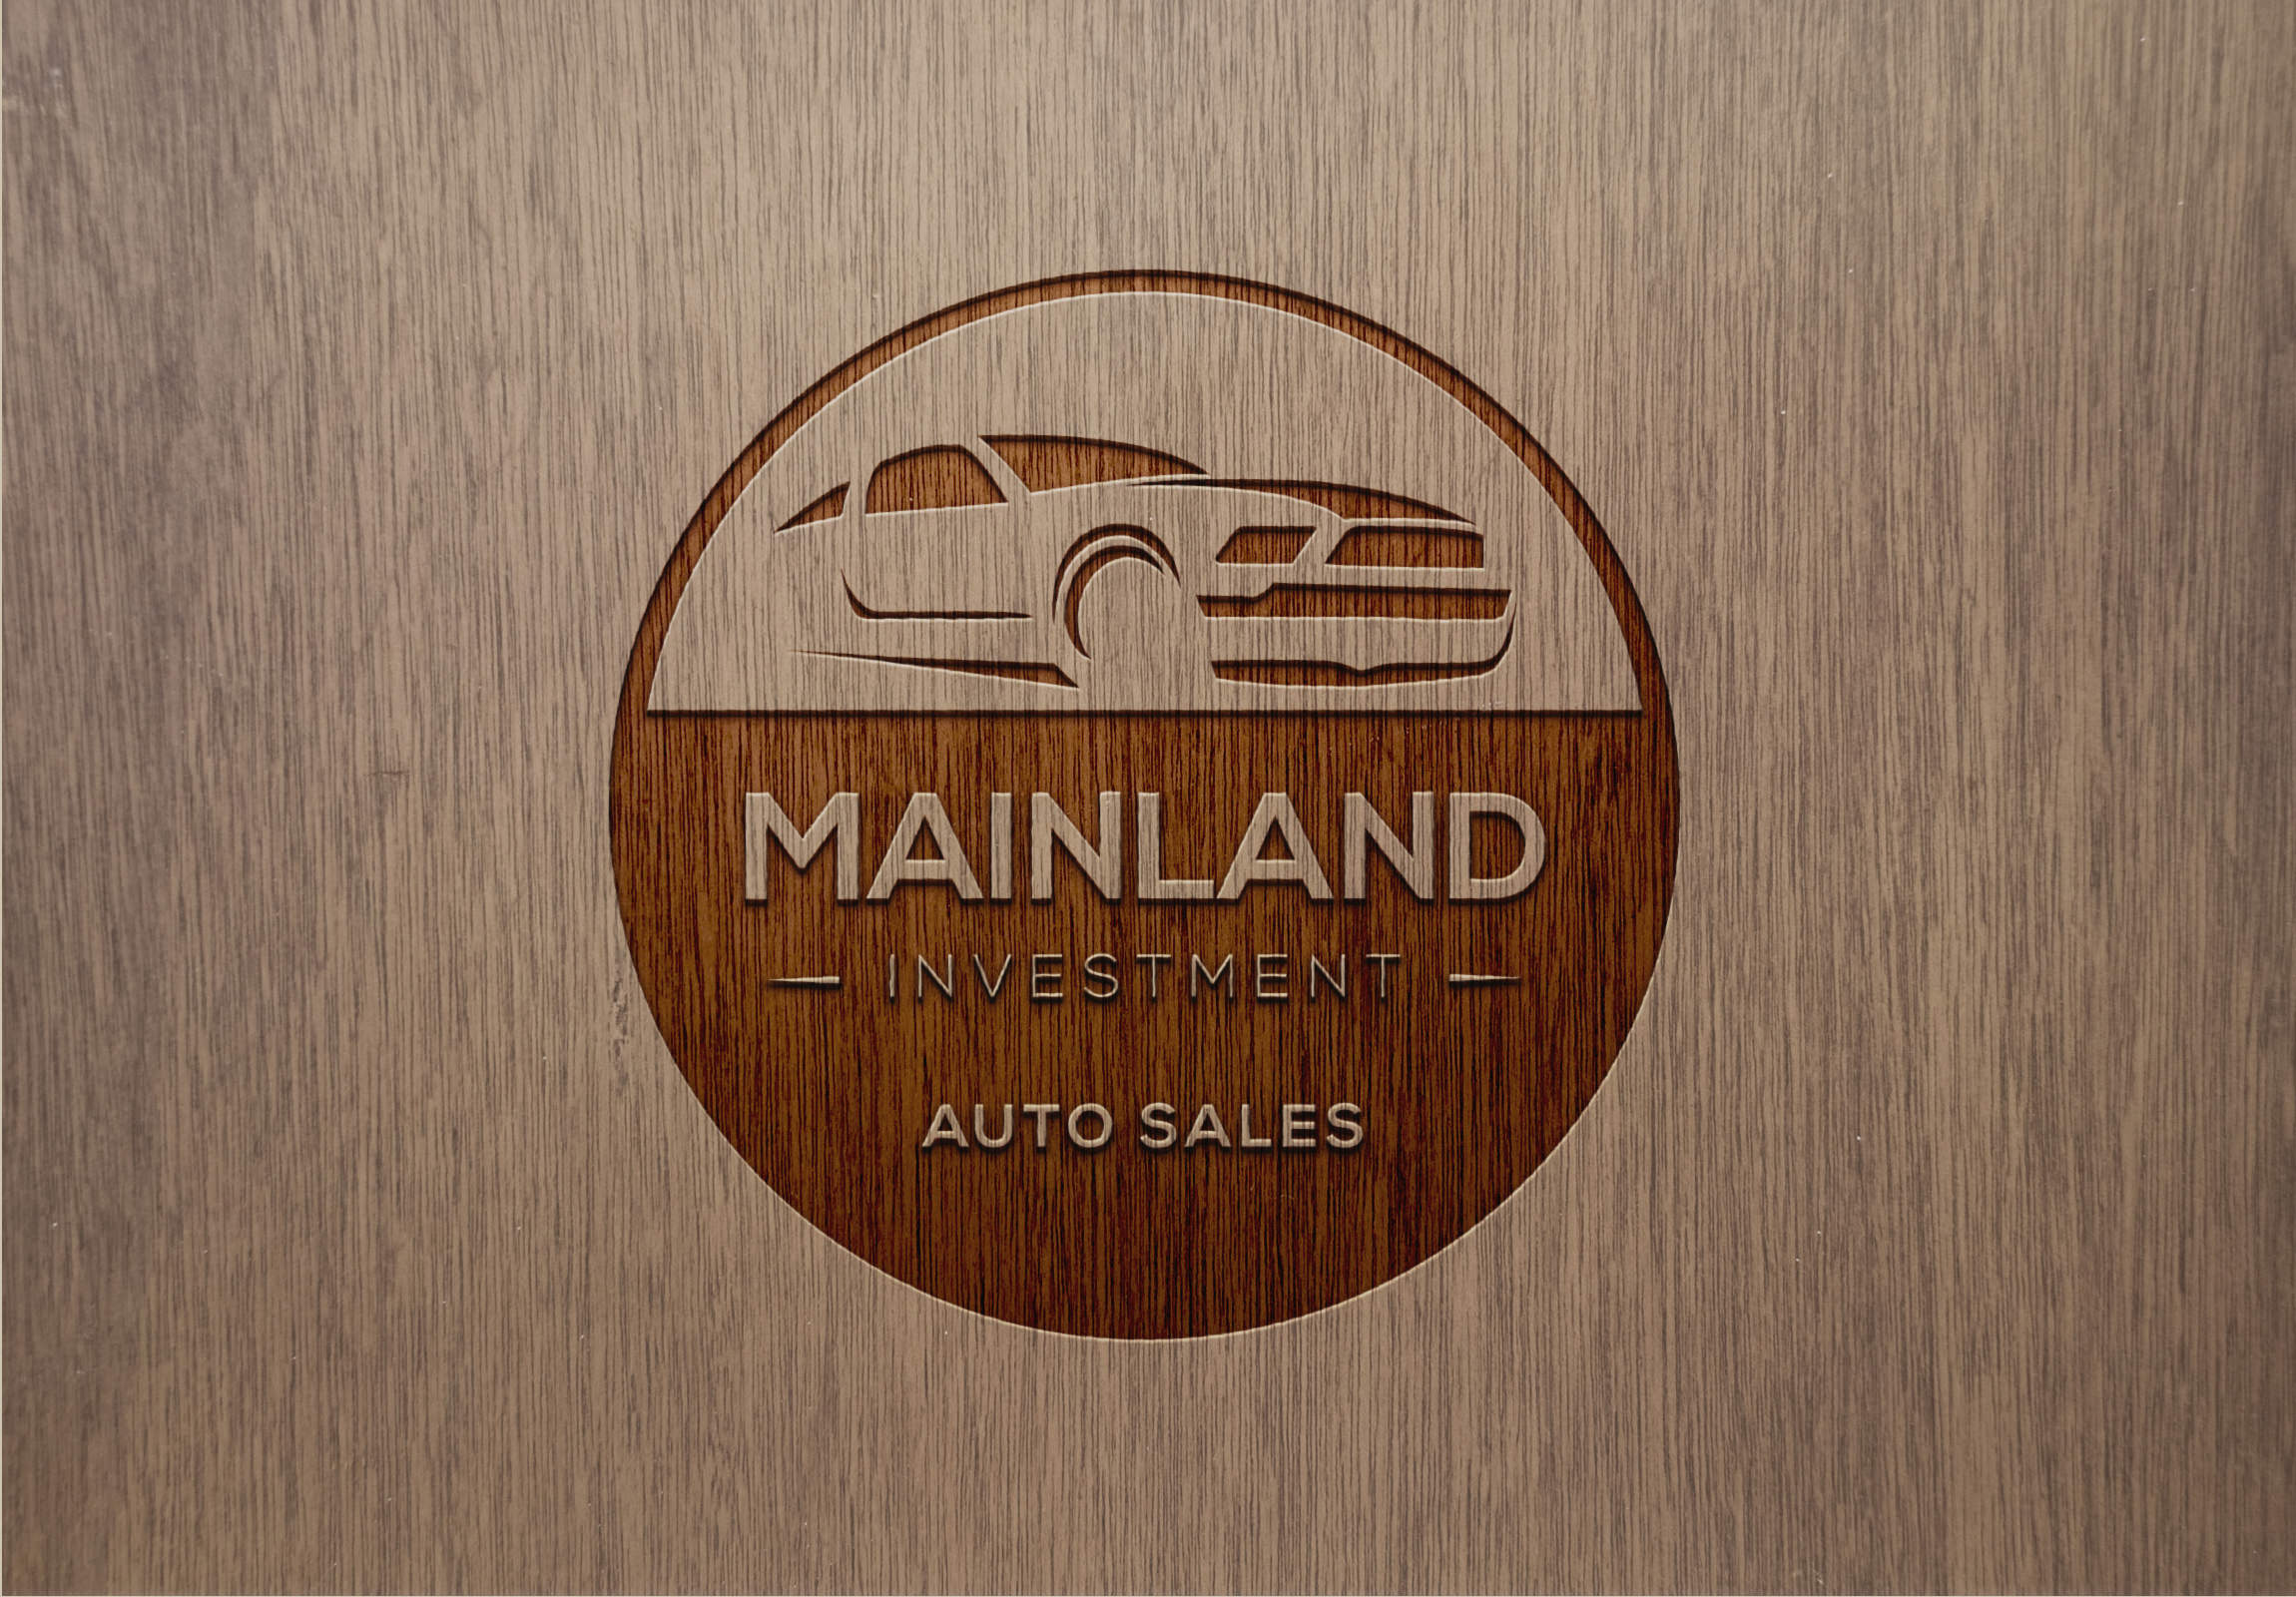 Mainland Investment Auto Sales